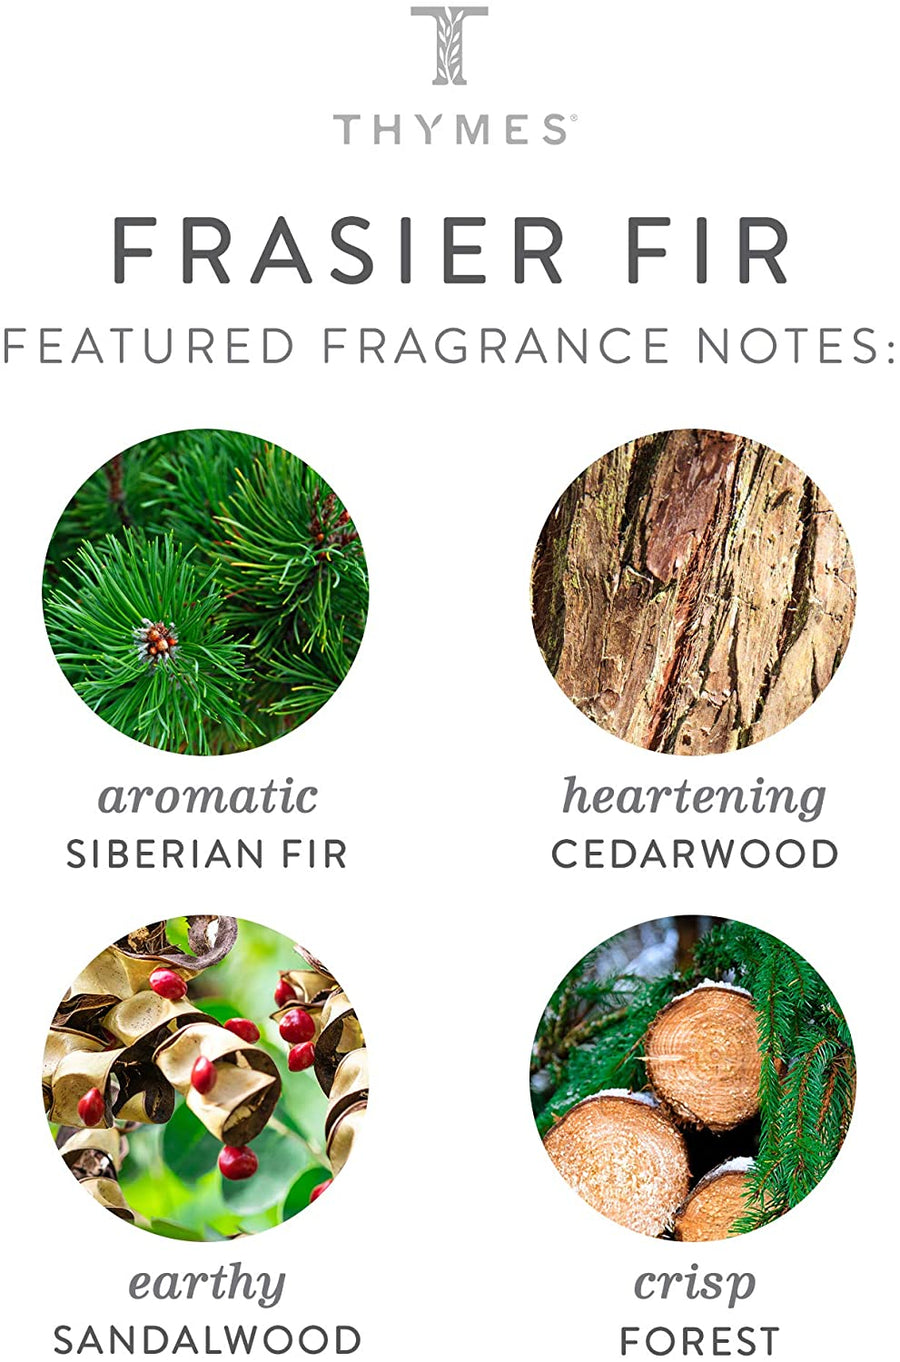 Pine Needle Candle - Frasier Fir